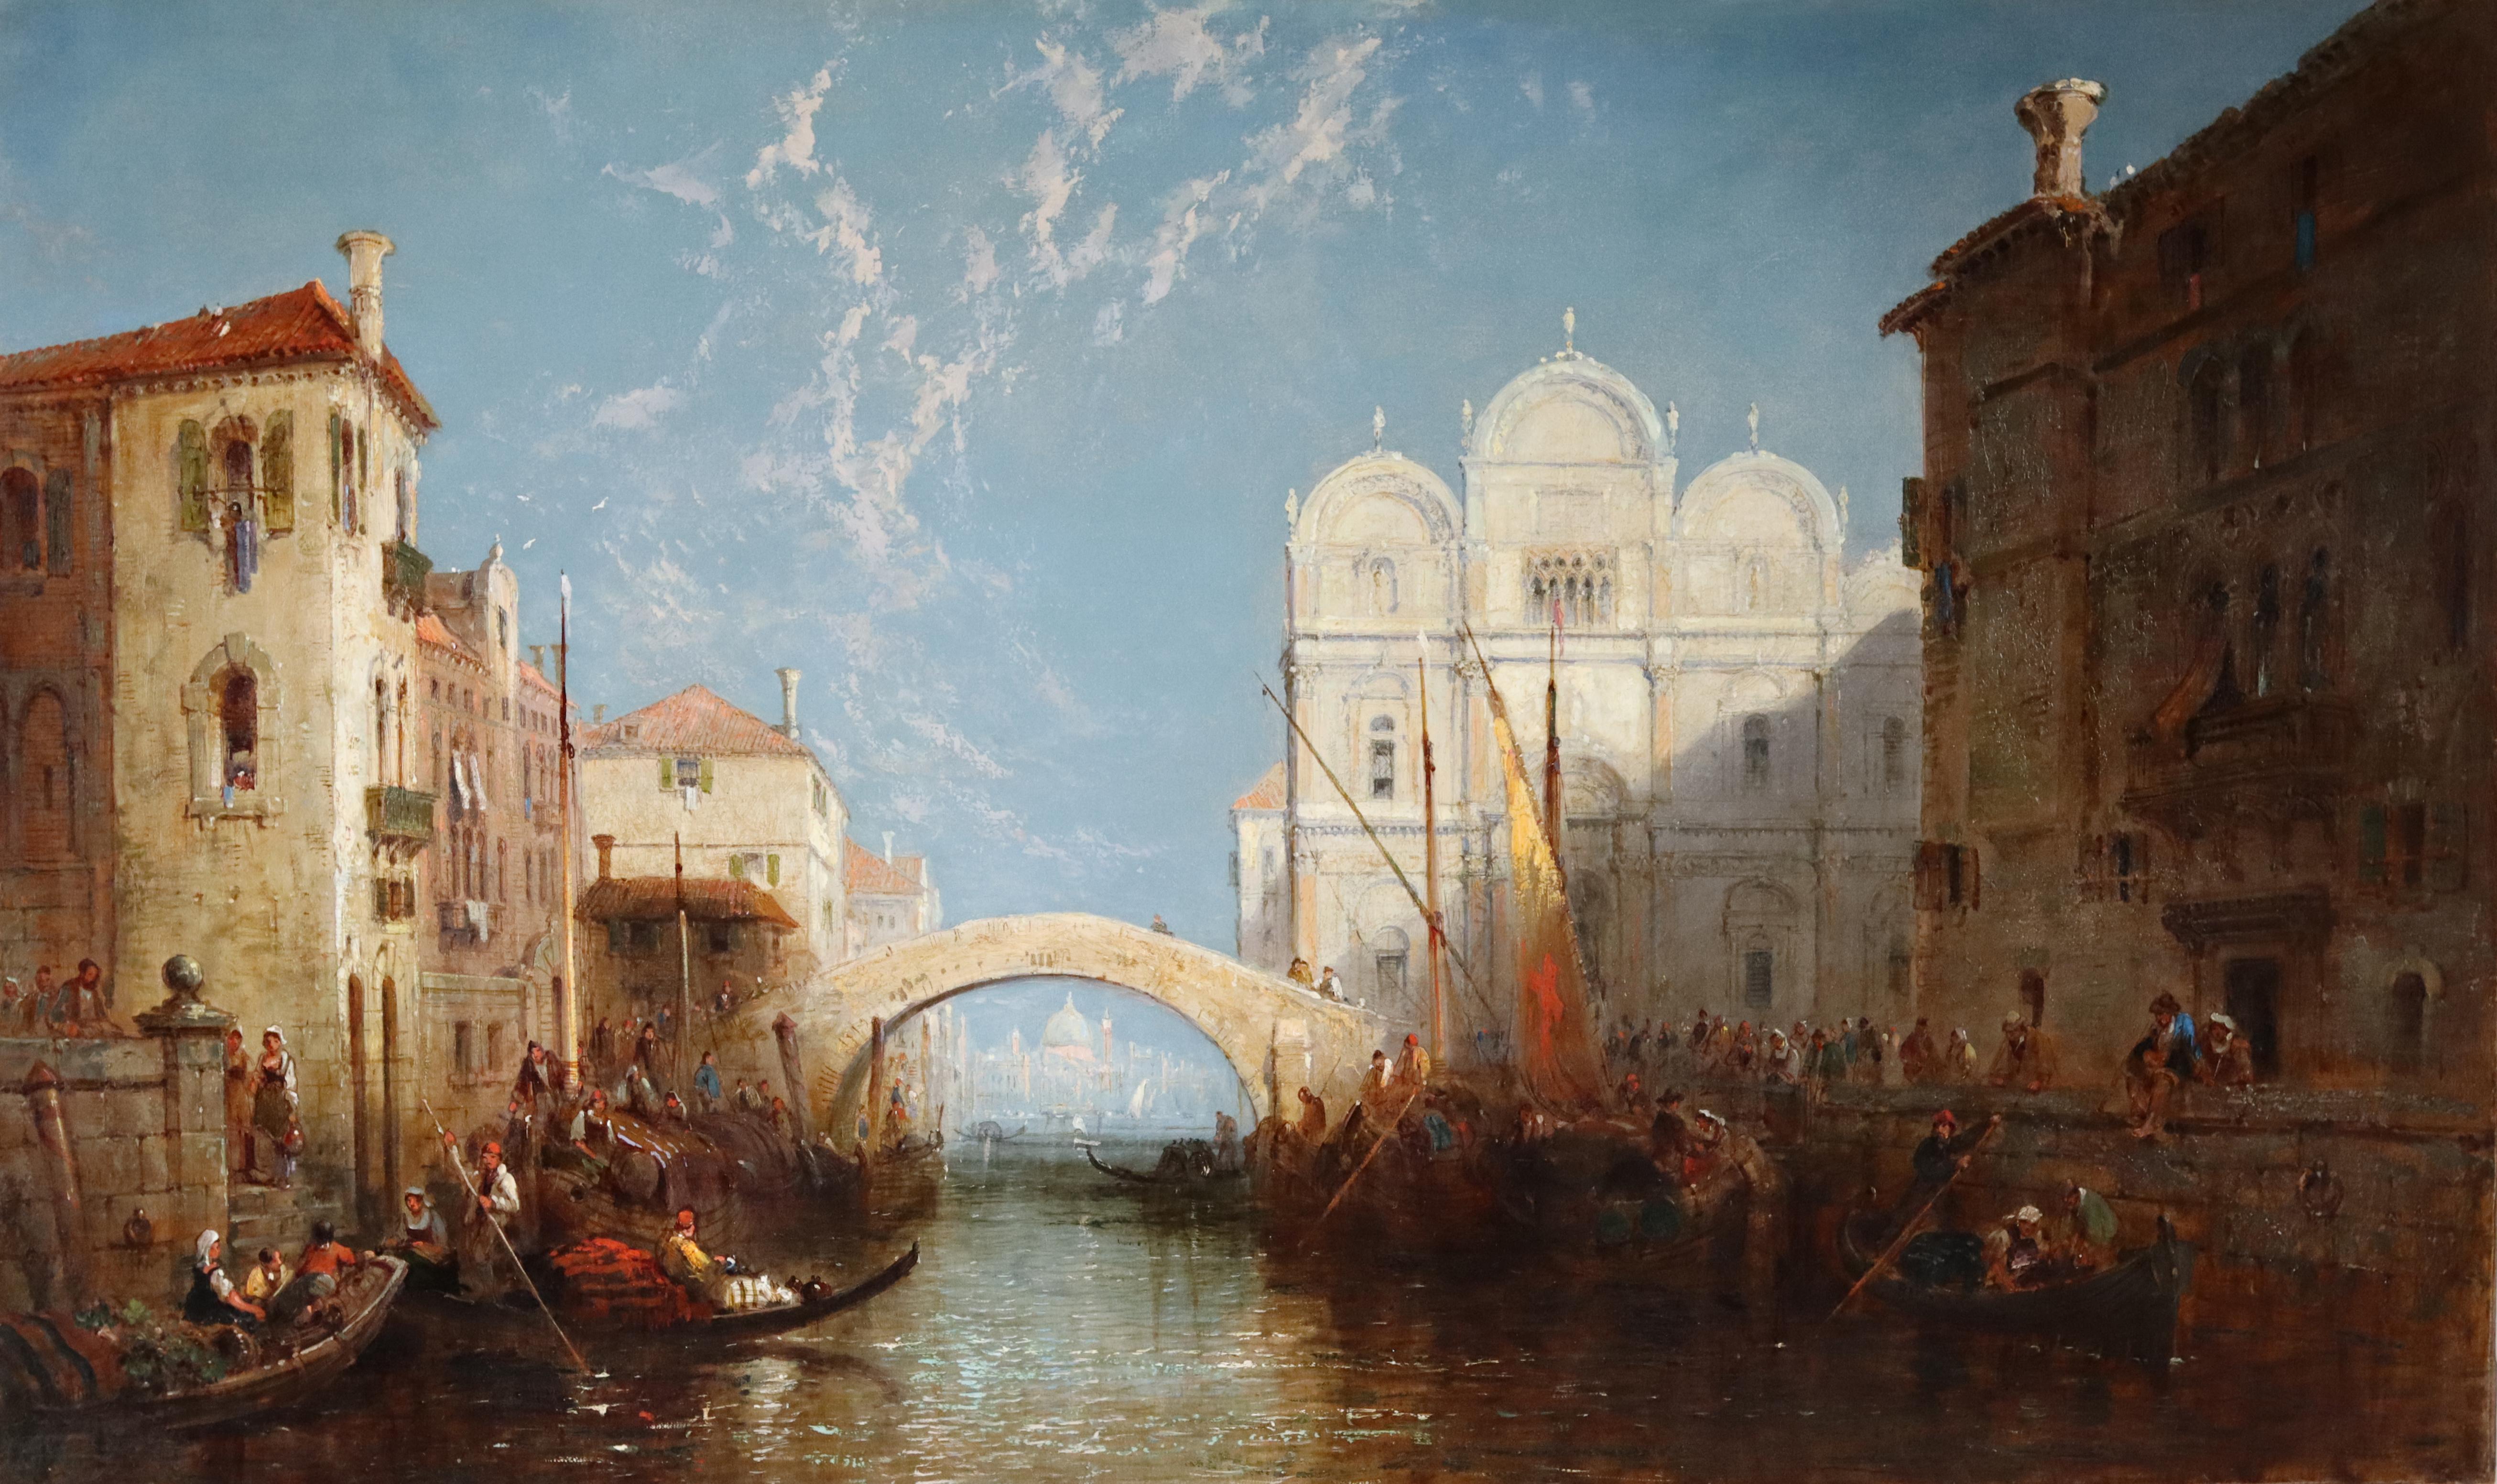 Jane Vivian Landscape Painting - The Scuola Grande di San Marco, Venice